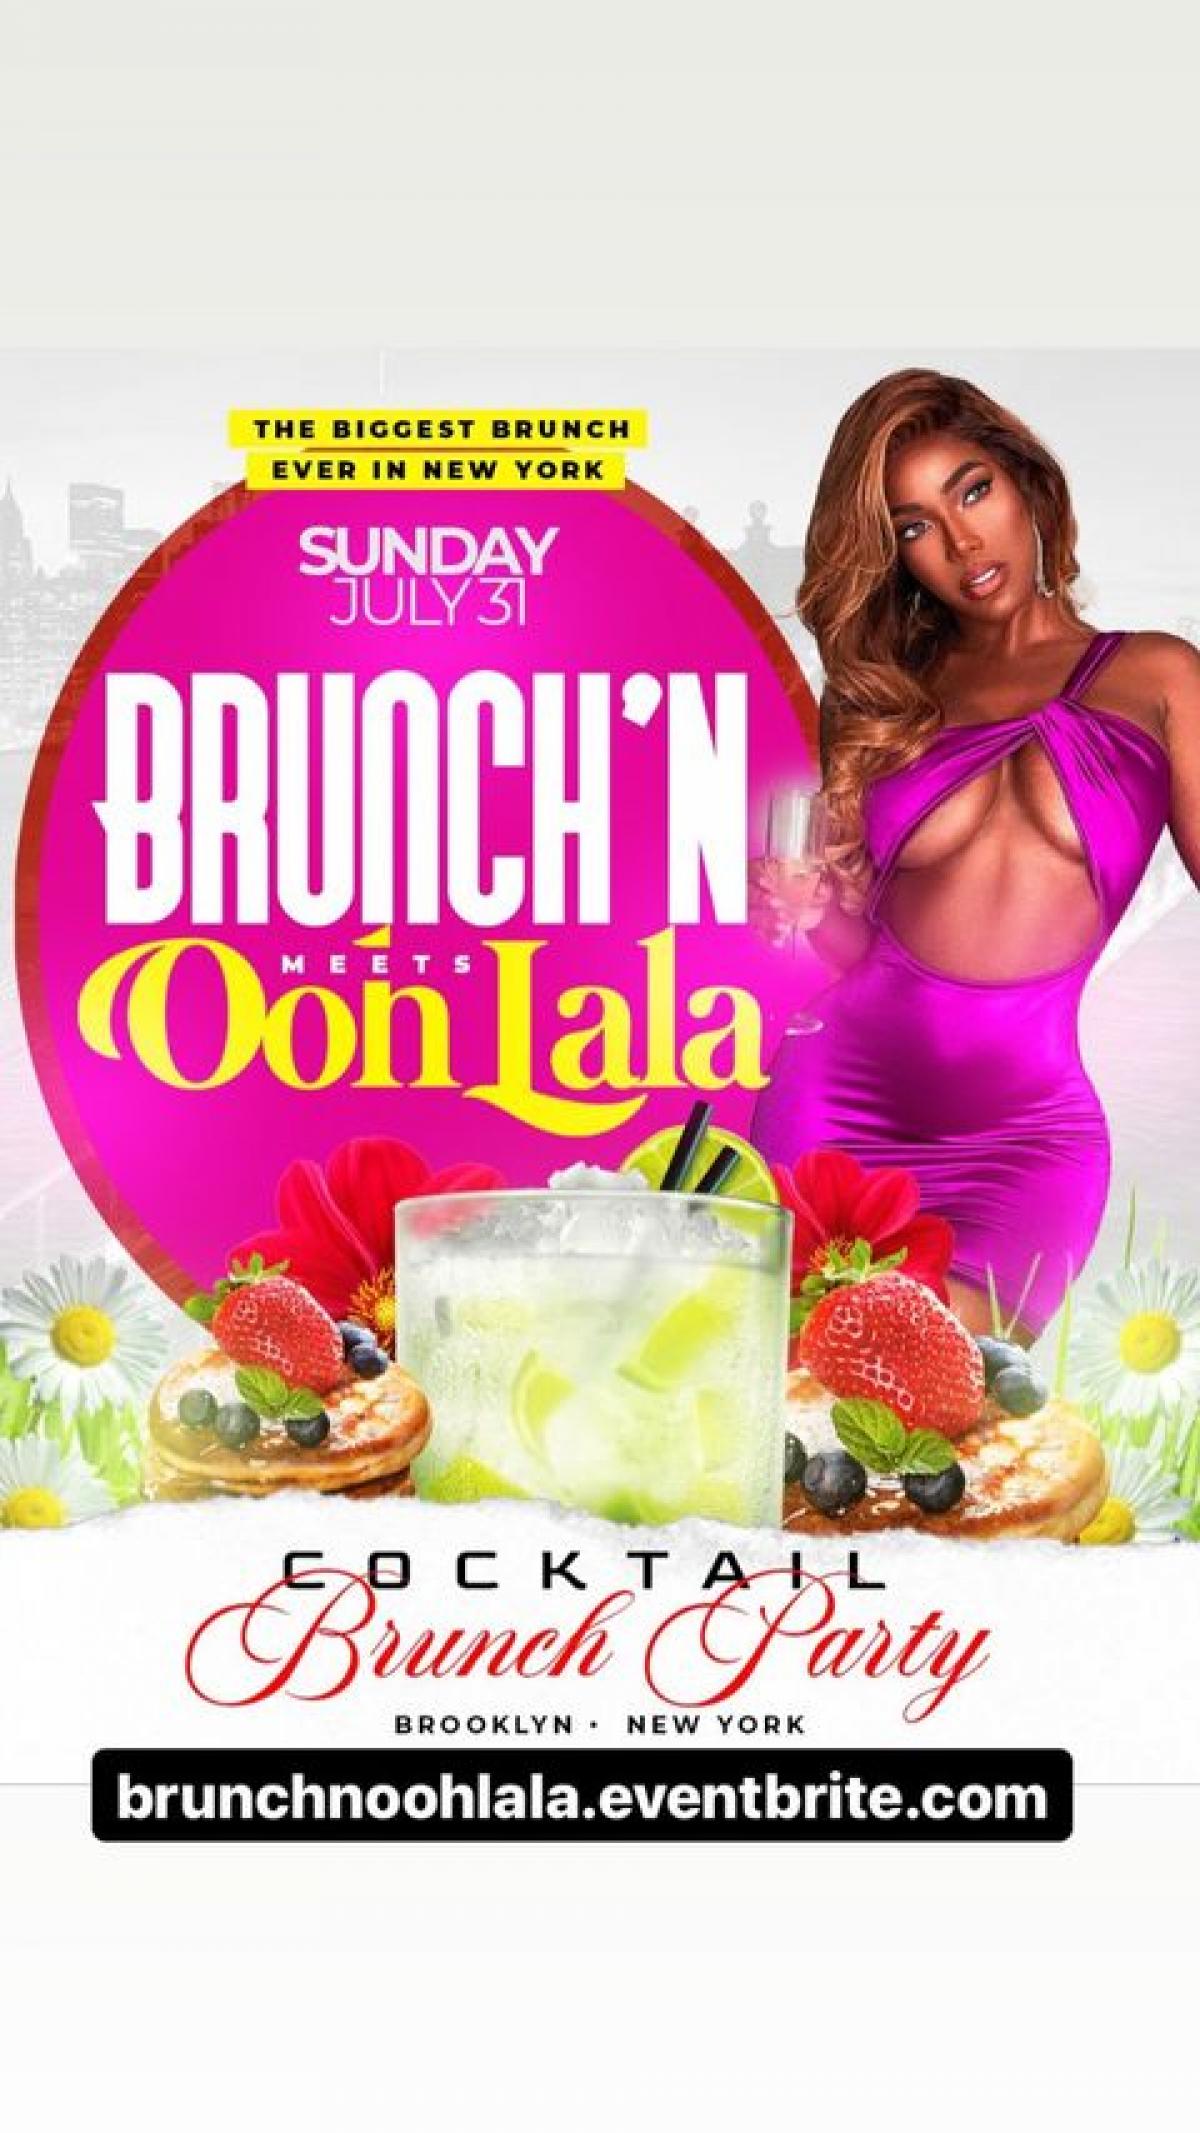 Brunch'N meets OOH LALA Cocktail Brunch flyer or graphic.